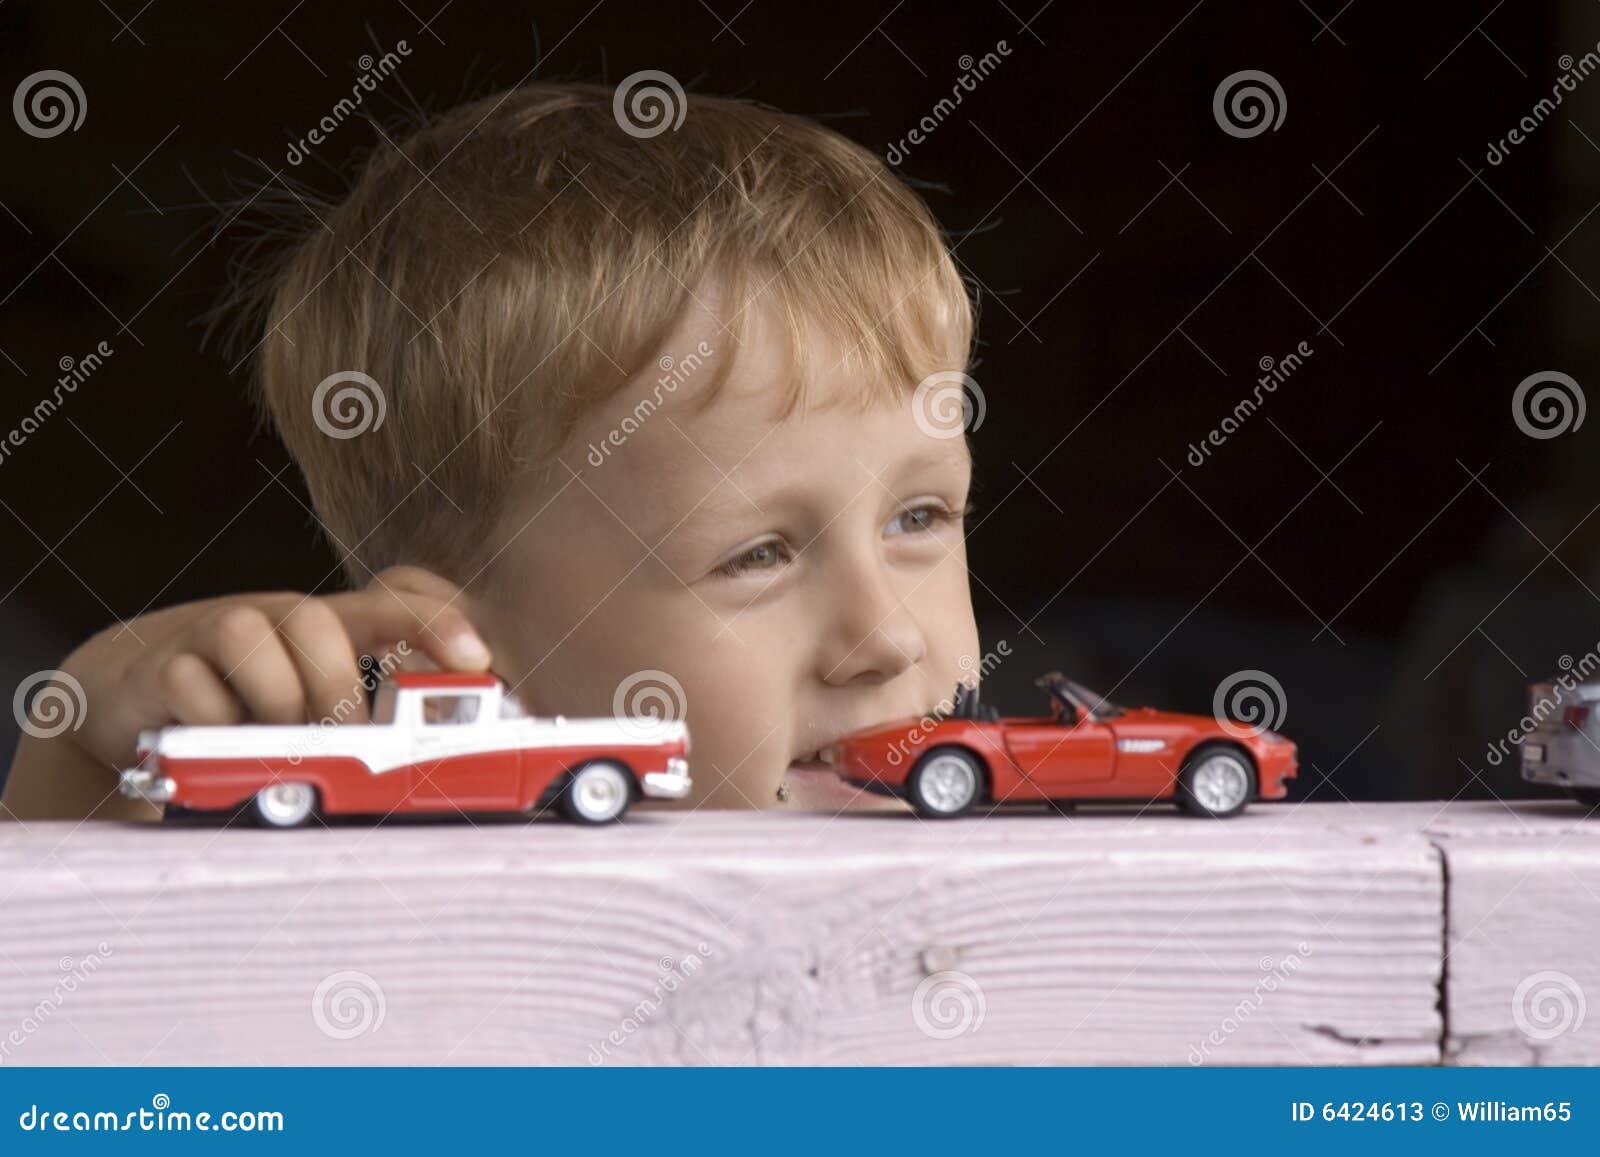 little boy plays a toy car